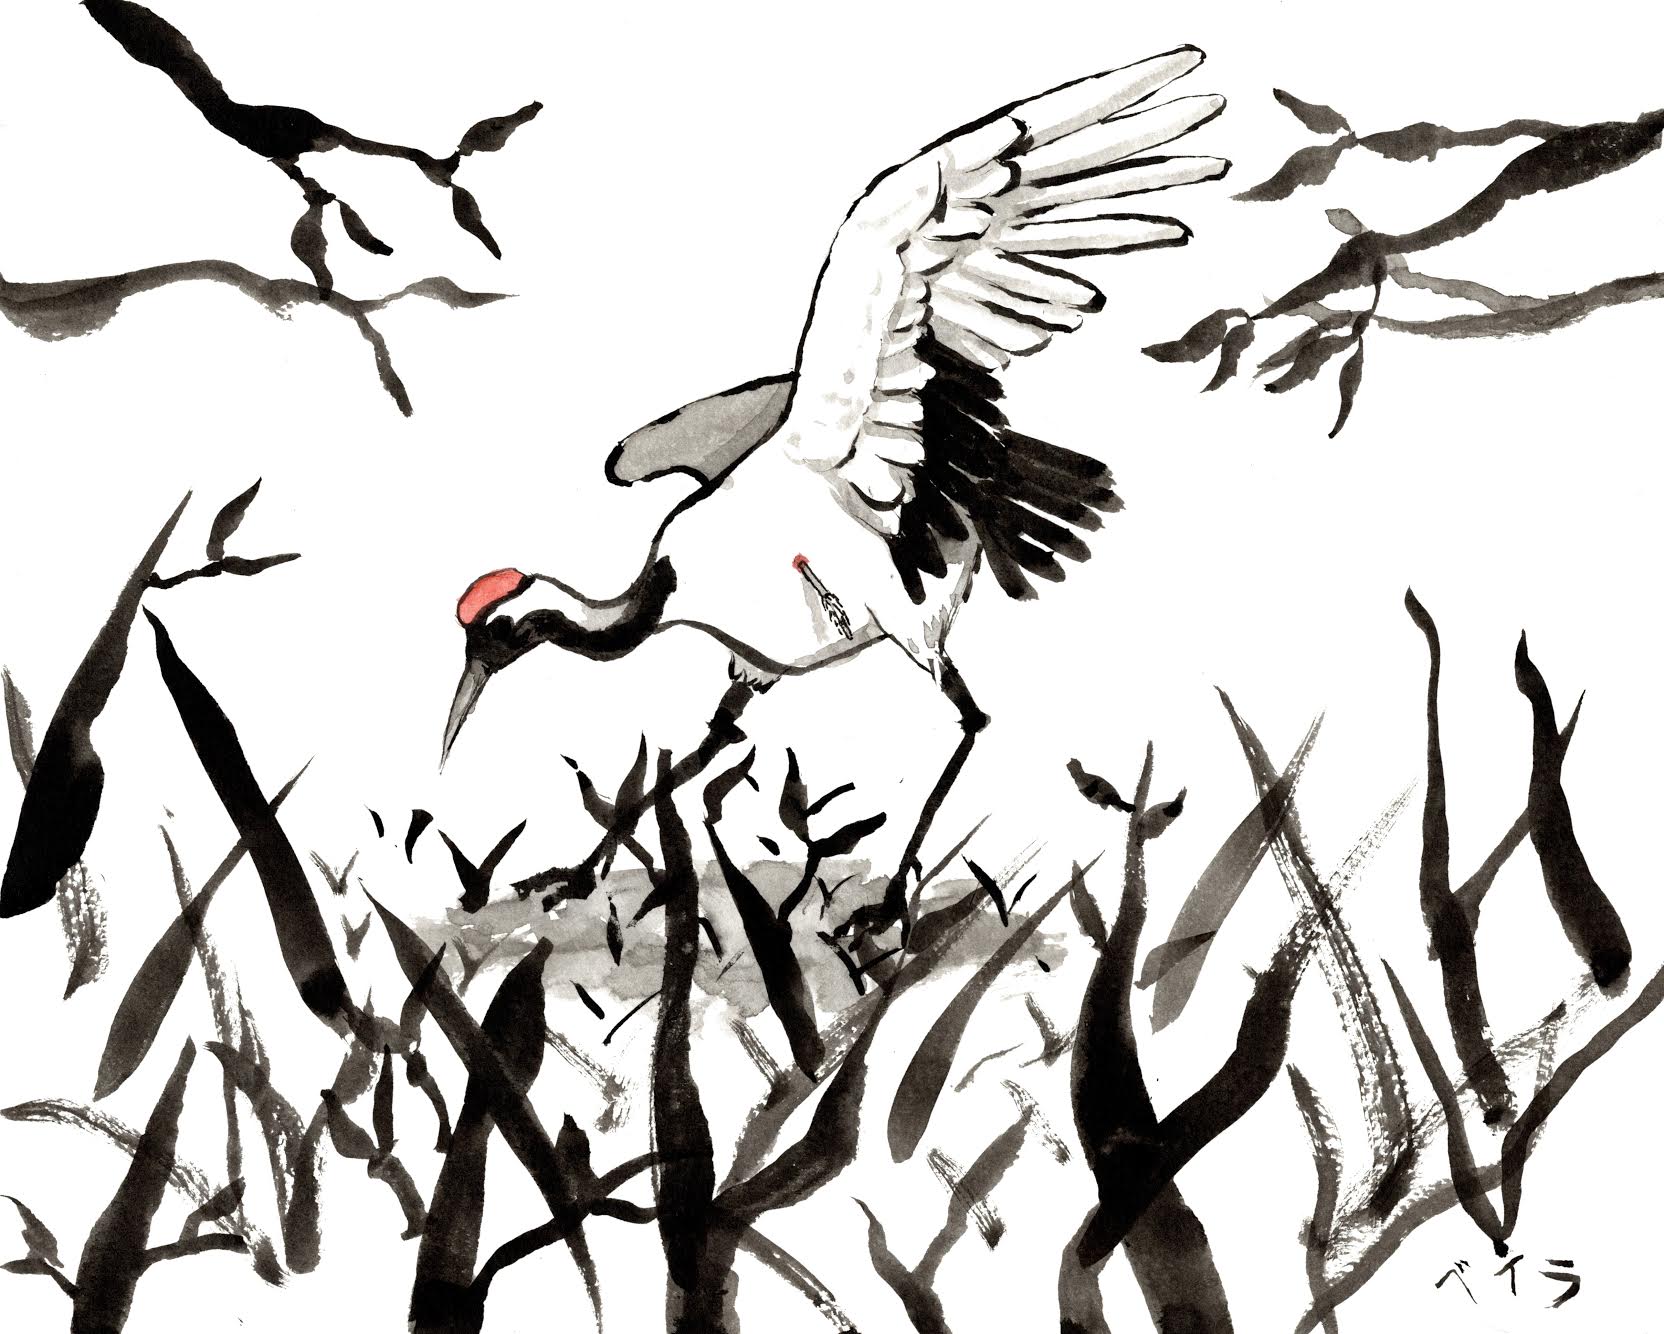 Andrea Kamens, storyteller - Crane and Branches Illustration